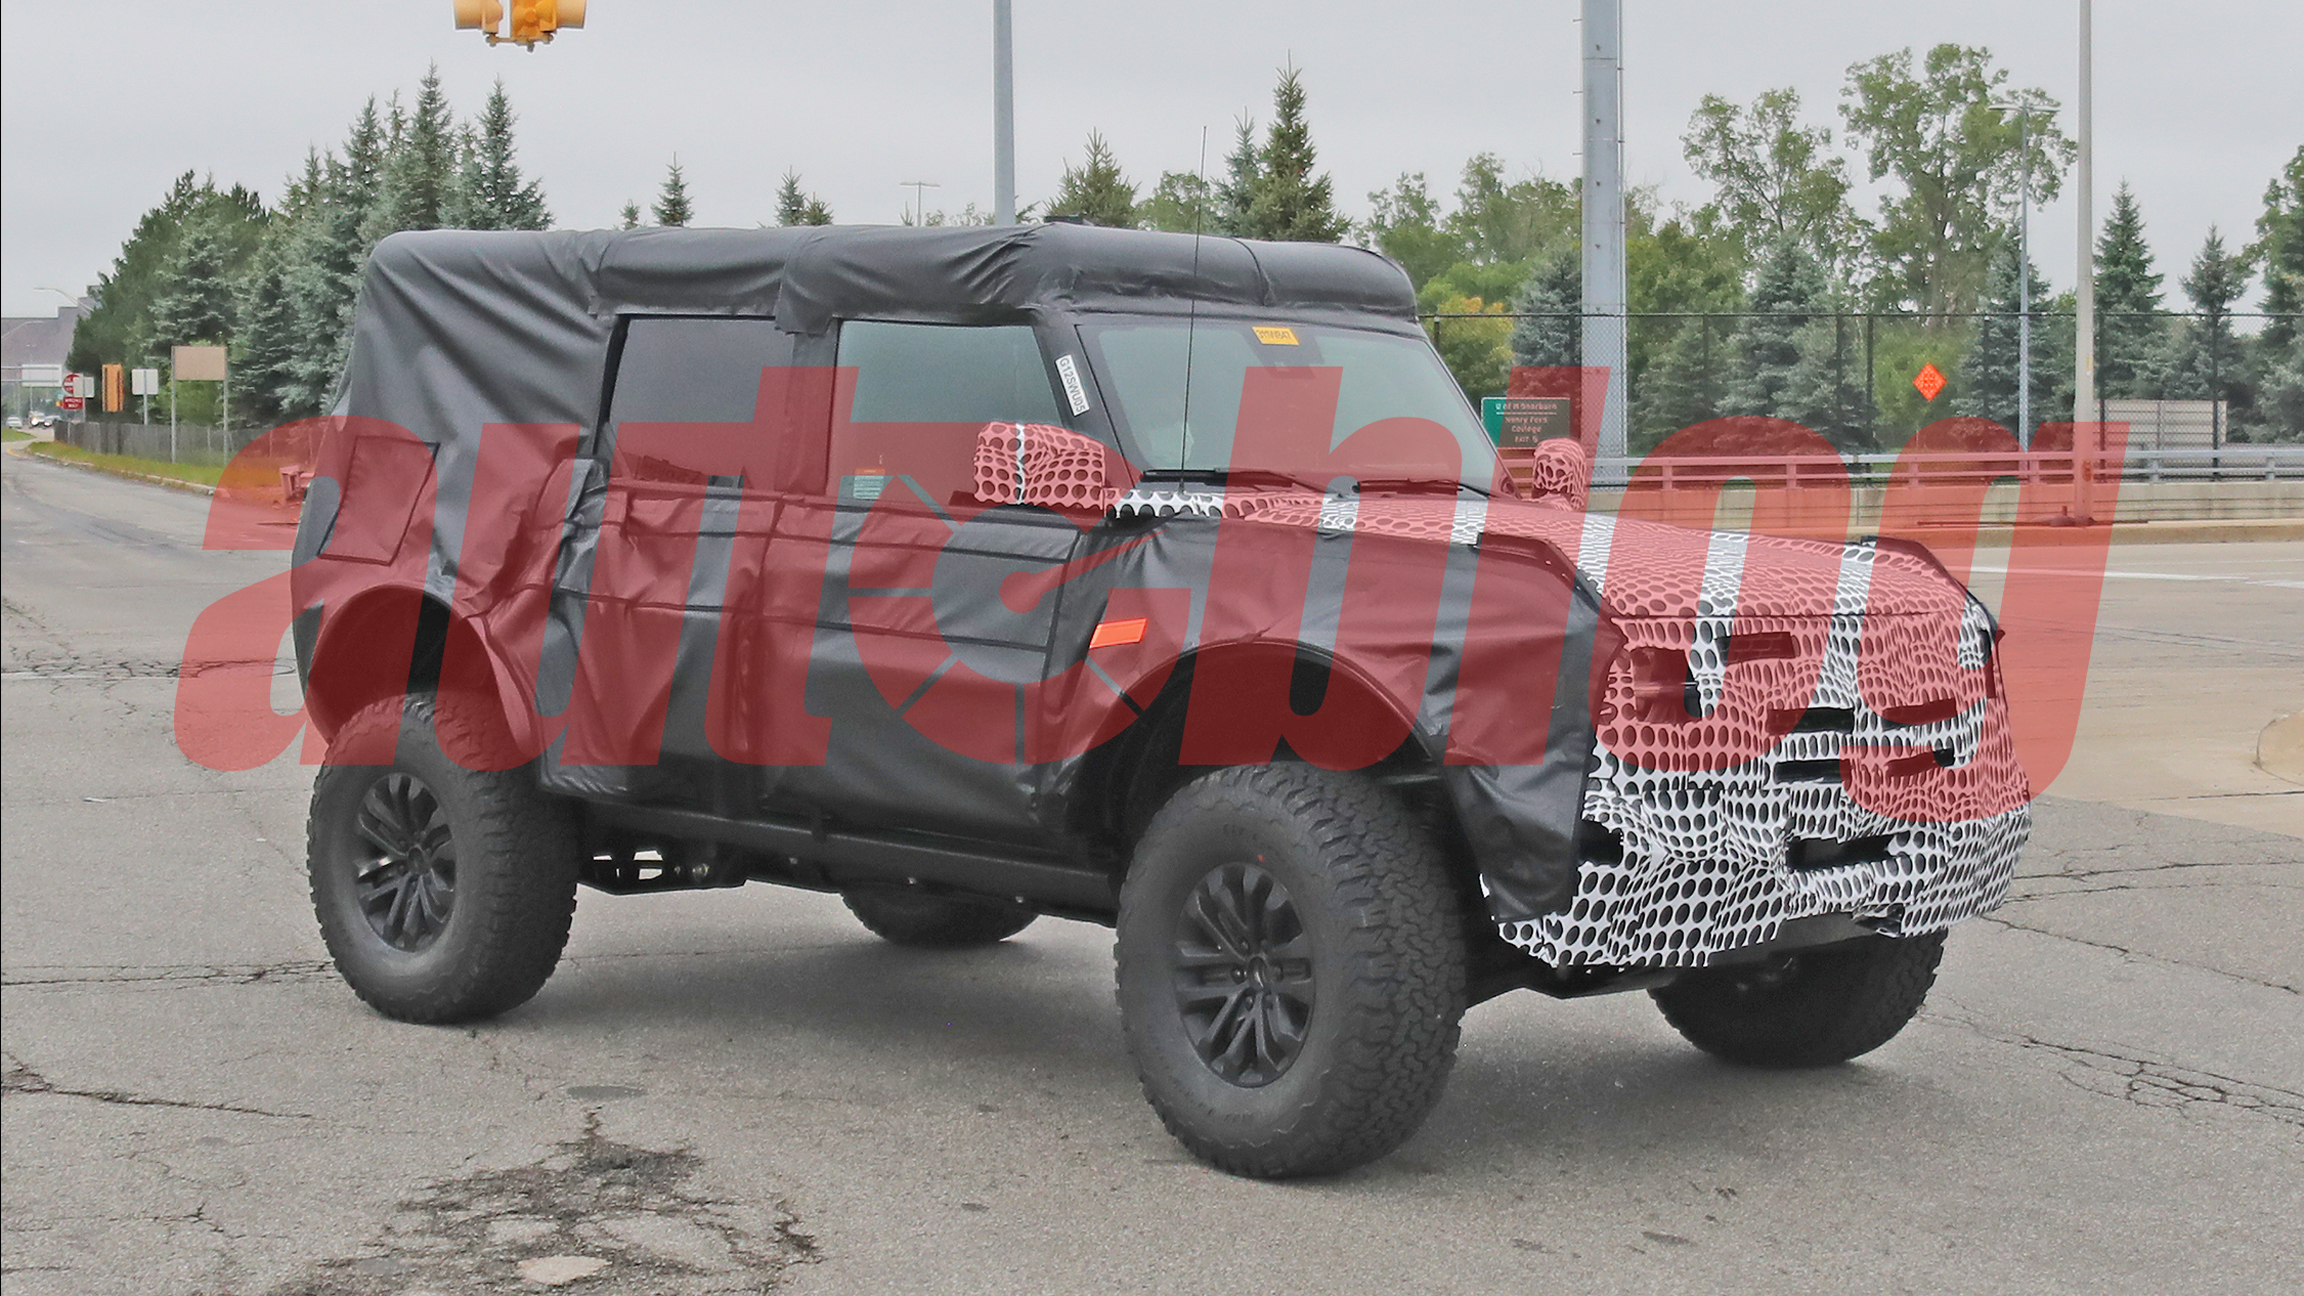 Ford Bronco Raptor prototype spy photos show beefy suspension